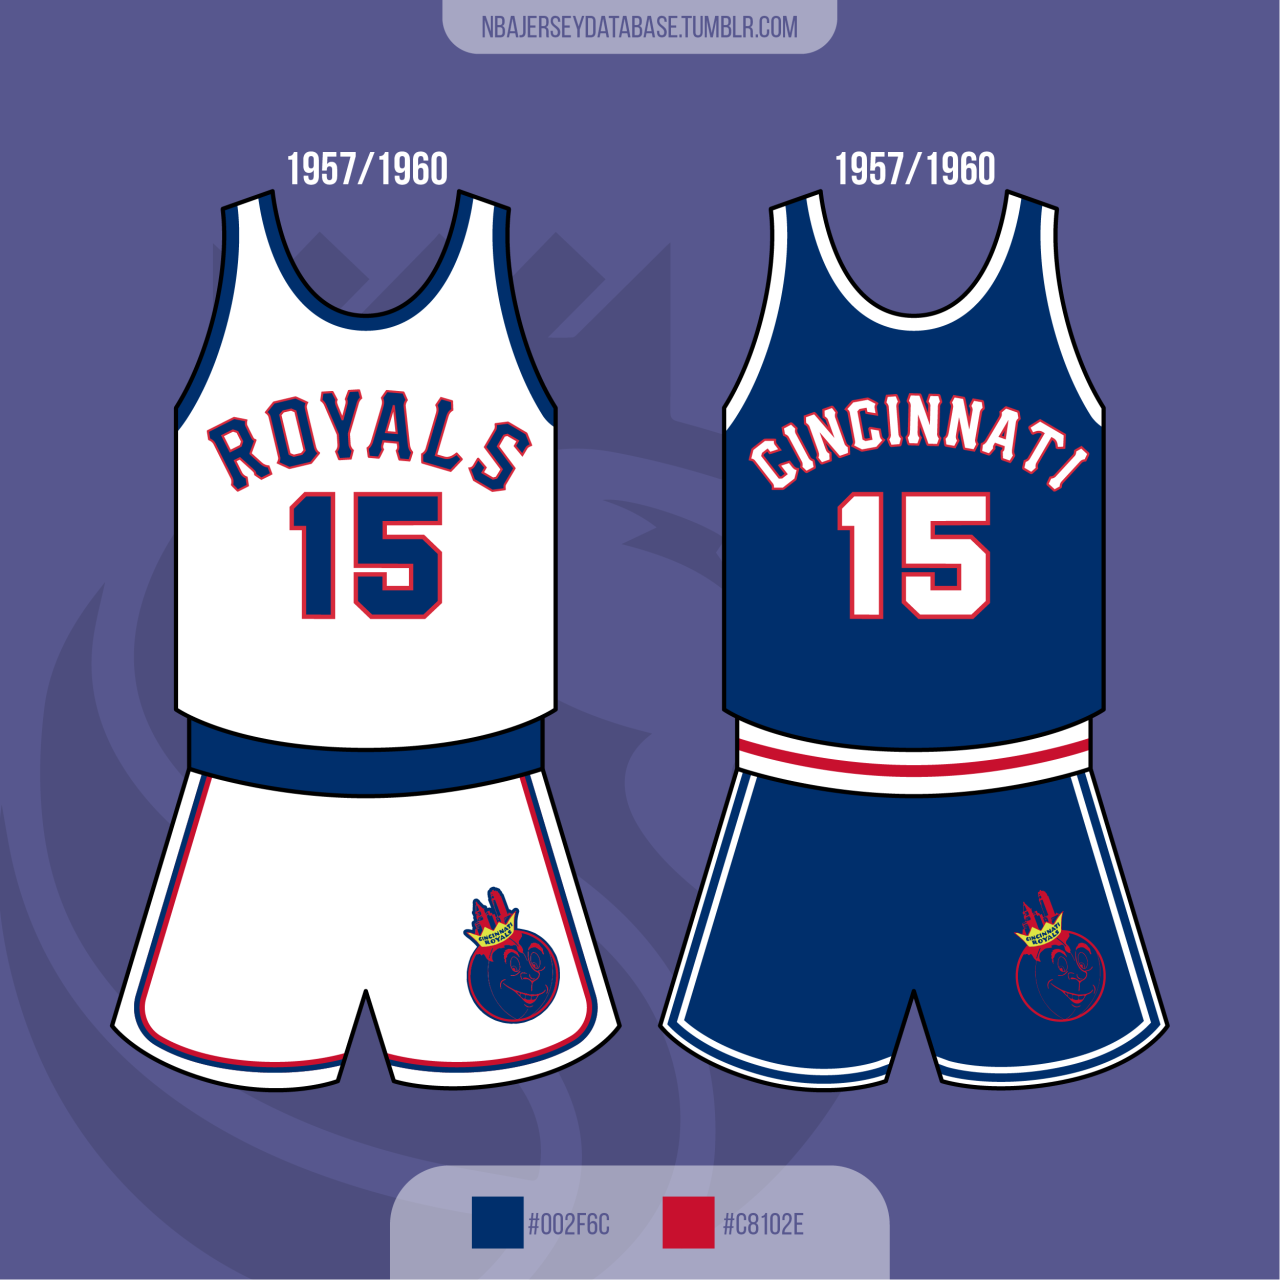 royals basketball jersey